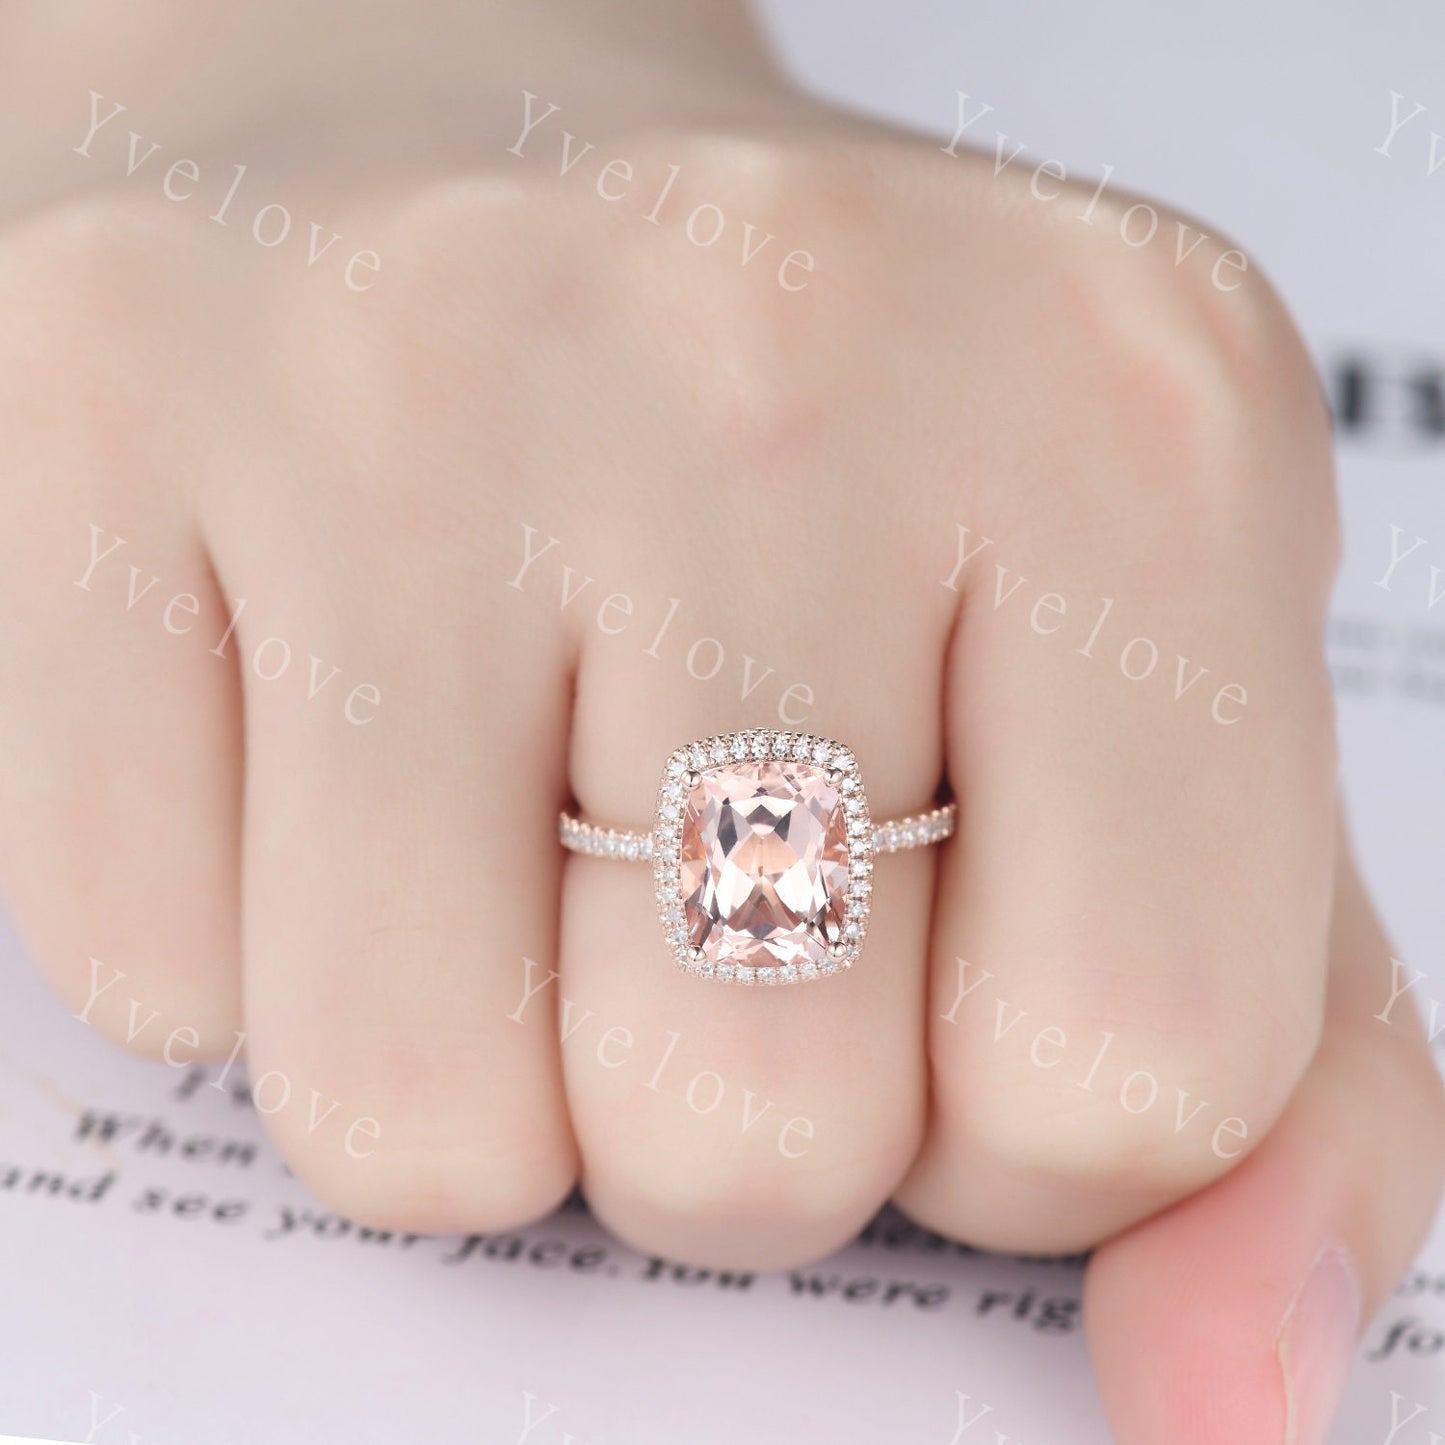 3ct Morganite engagement ring pink morganite ring big cushion shape natural gemstone with thin diamond wedding band solid 14k rose gold gift